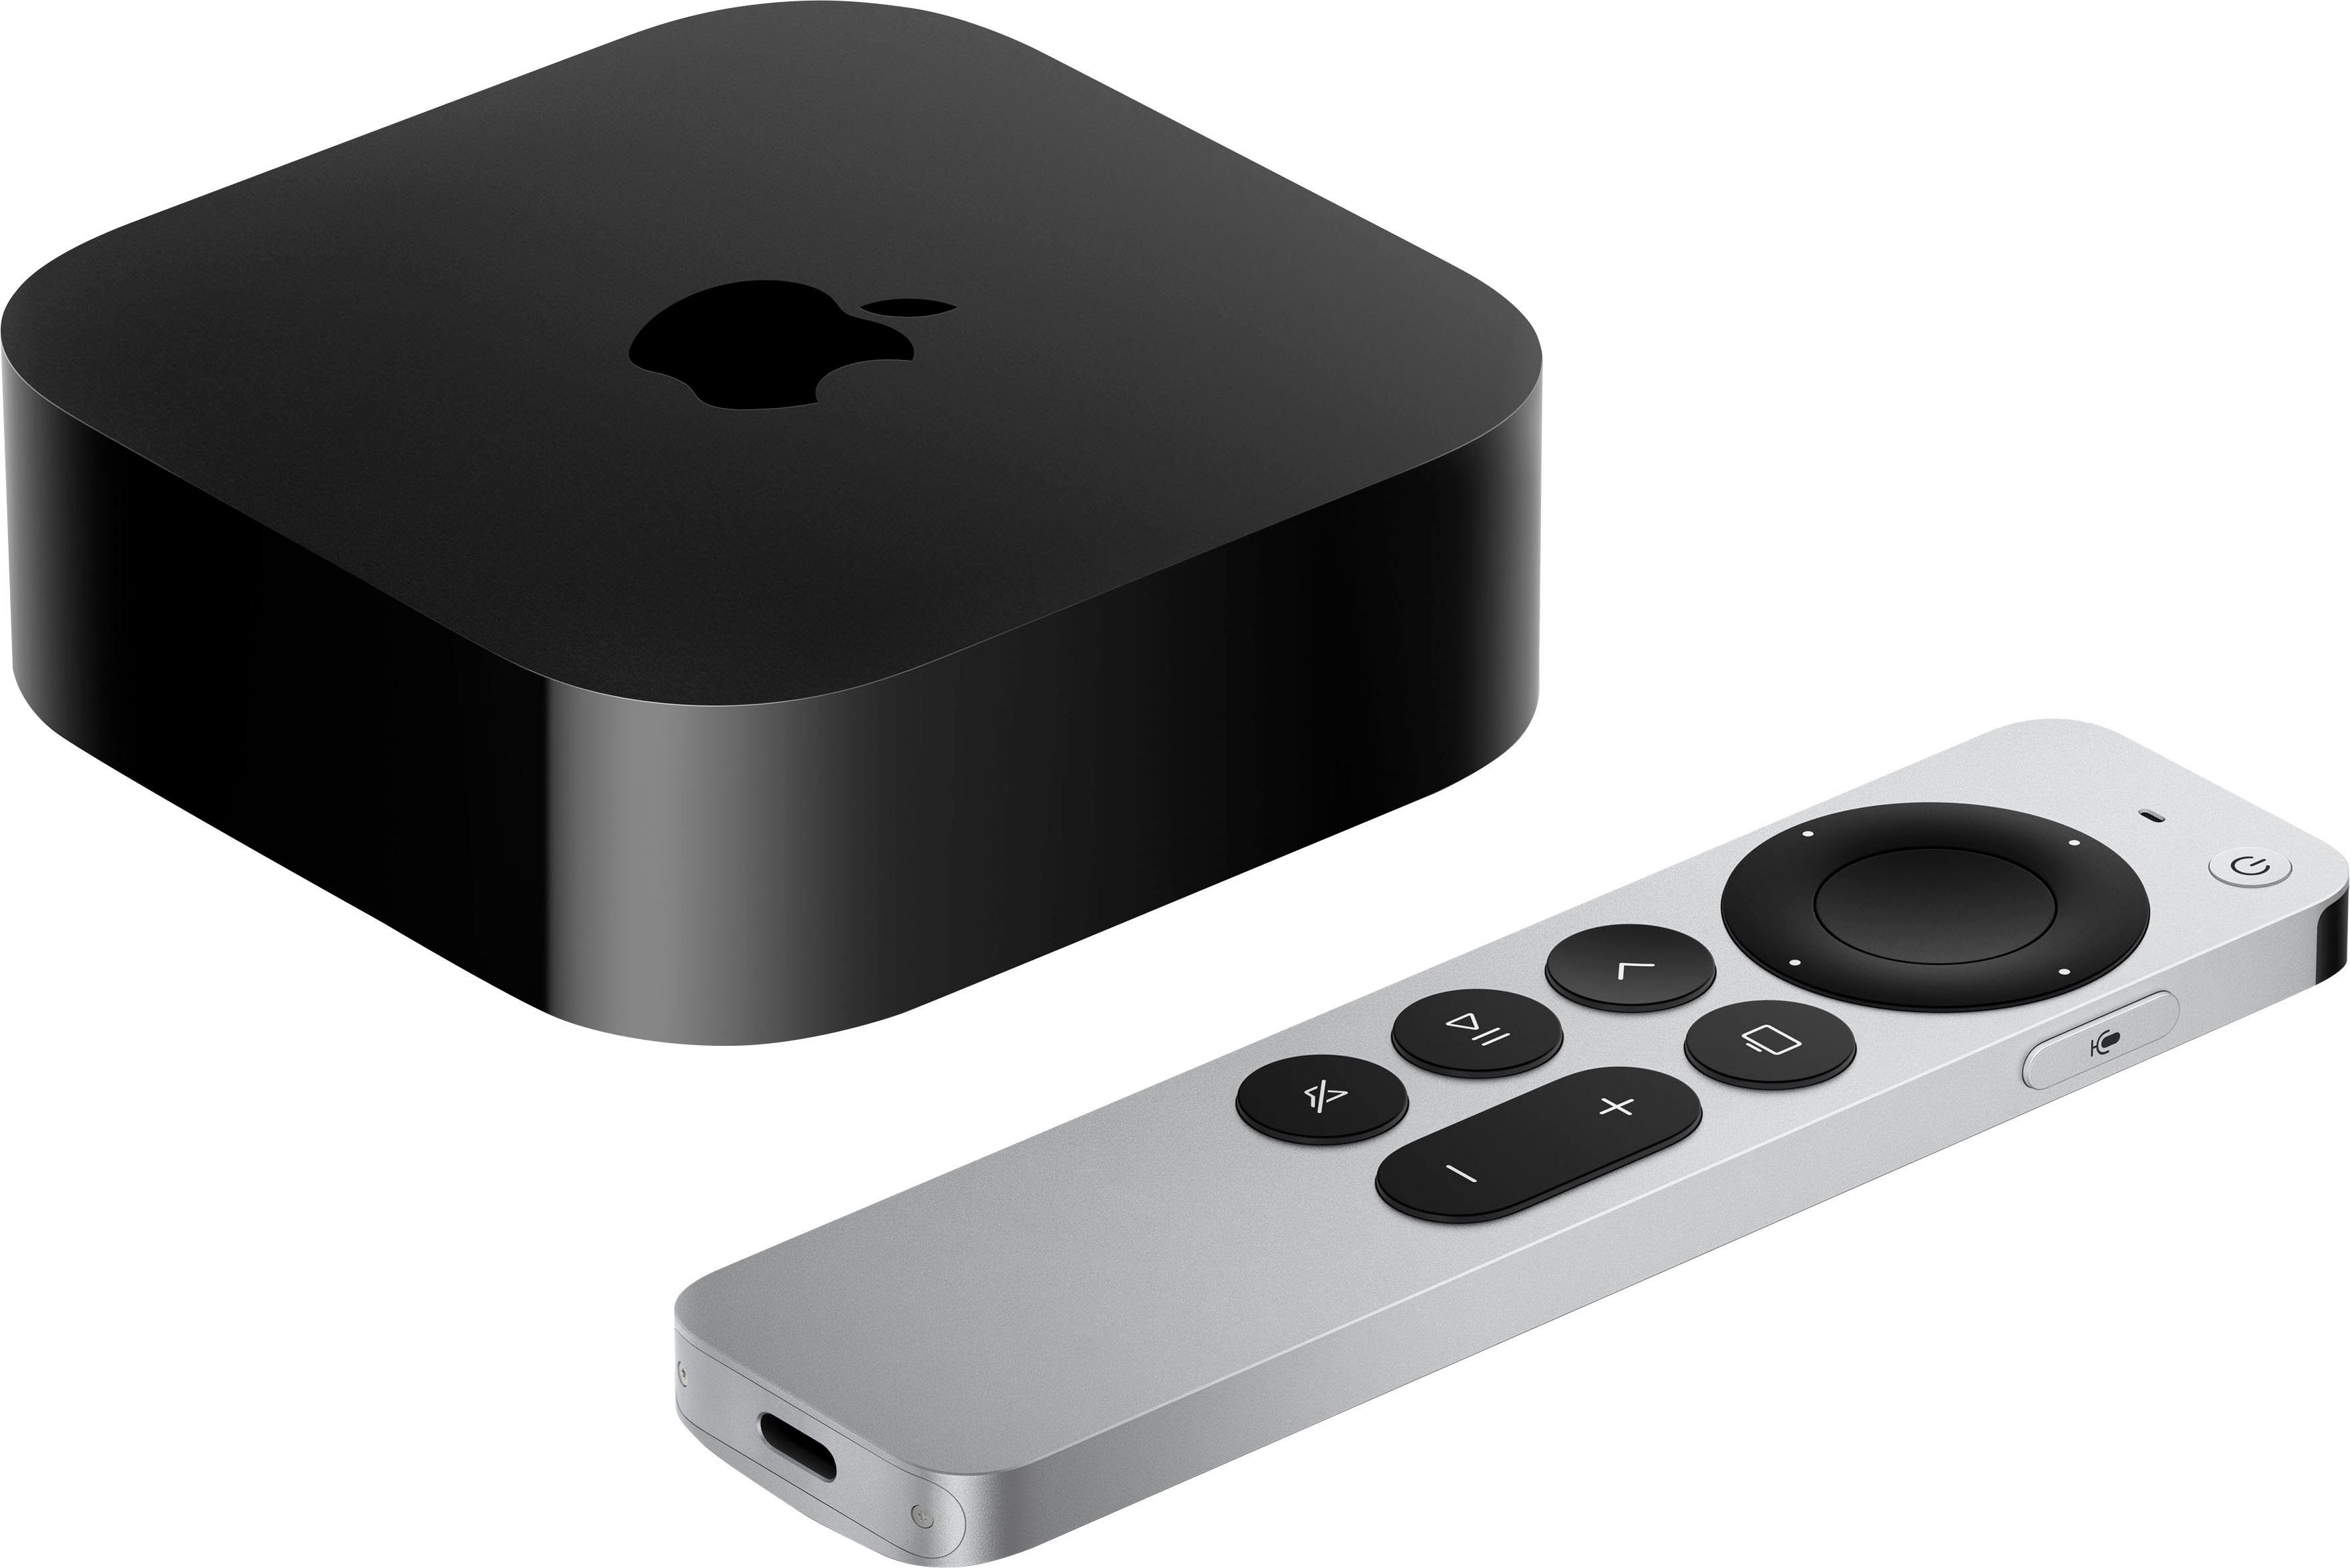 Gen) TV 4K Apple Wi‑Fi 64GB (3rd Streaming-Box